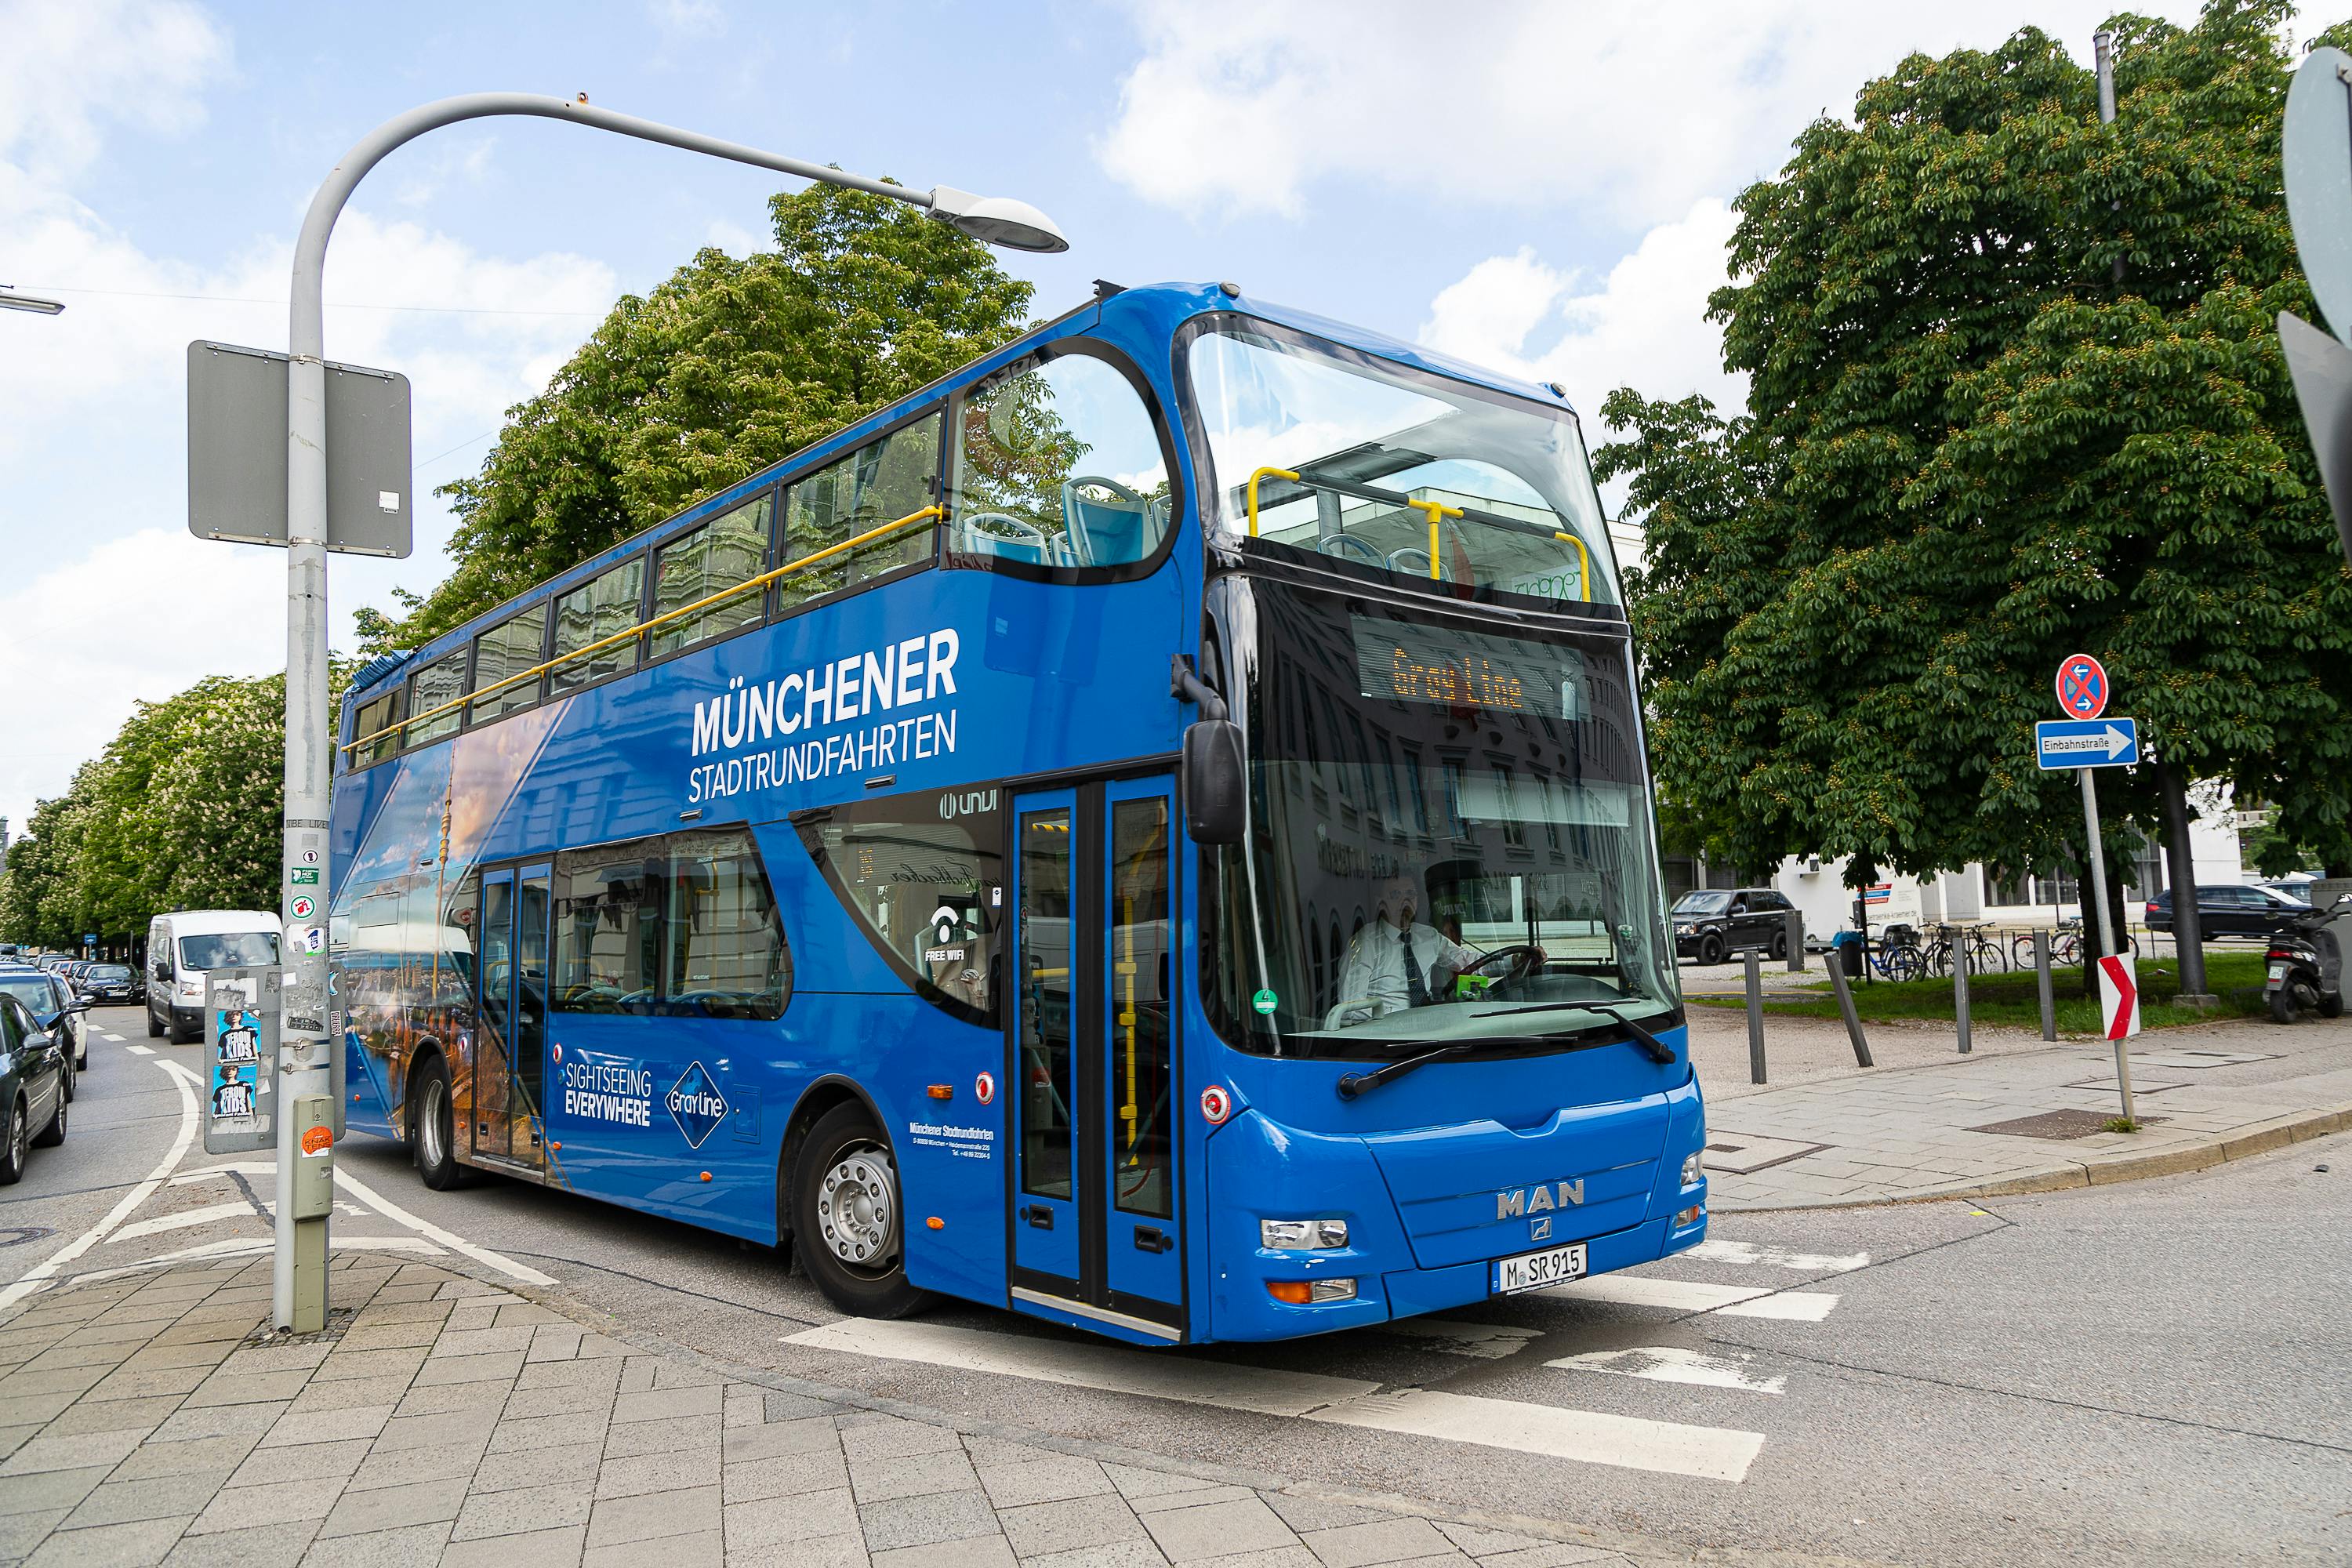 24 hour grand hop on off bus tour of Munich Musement